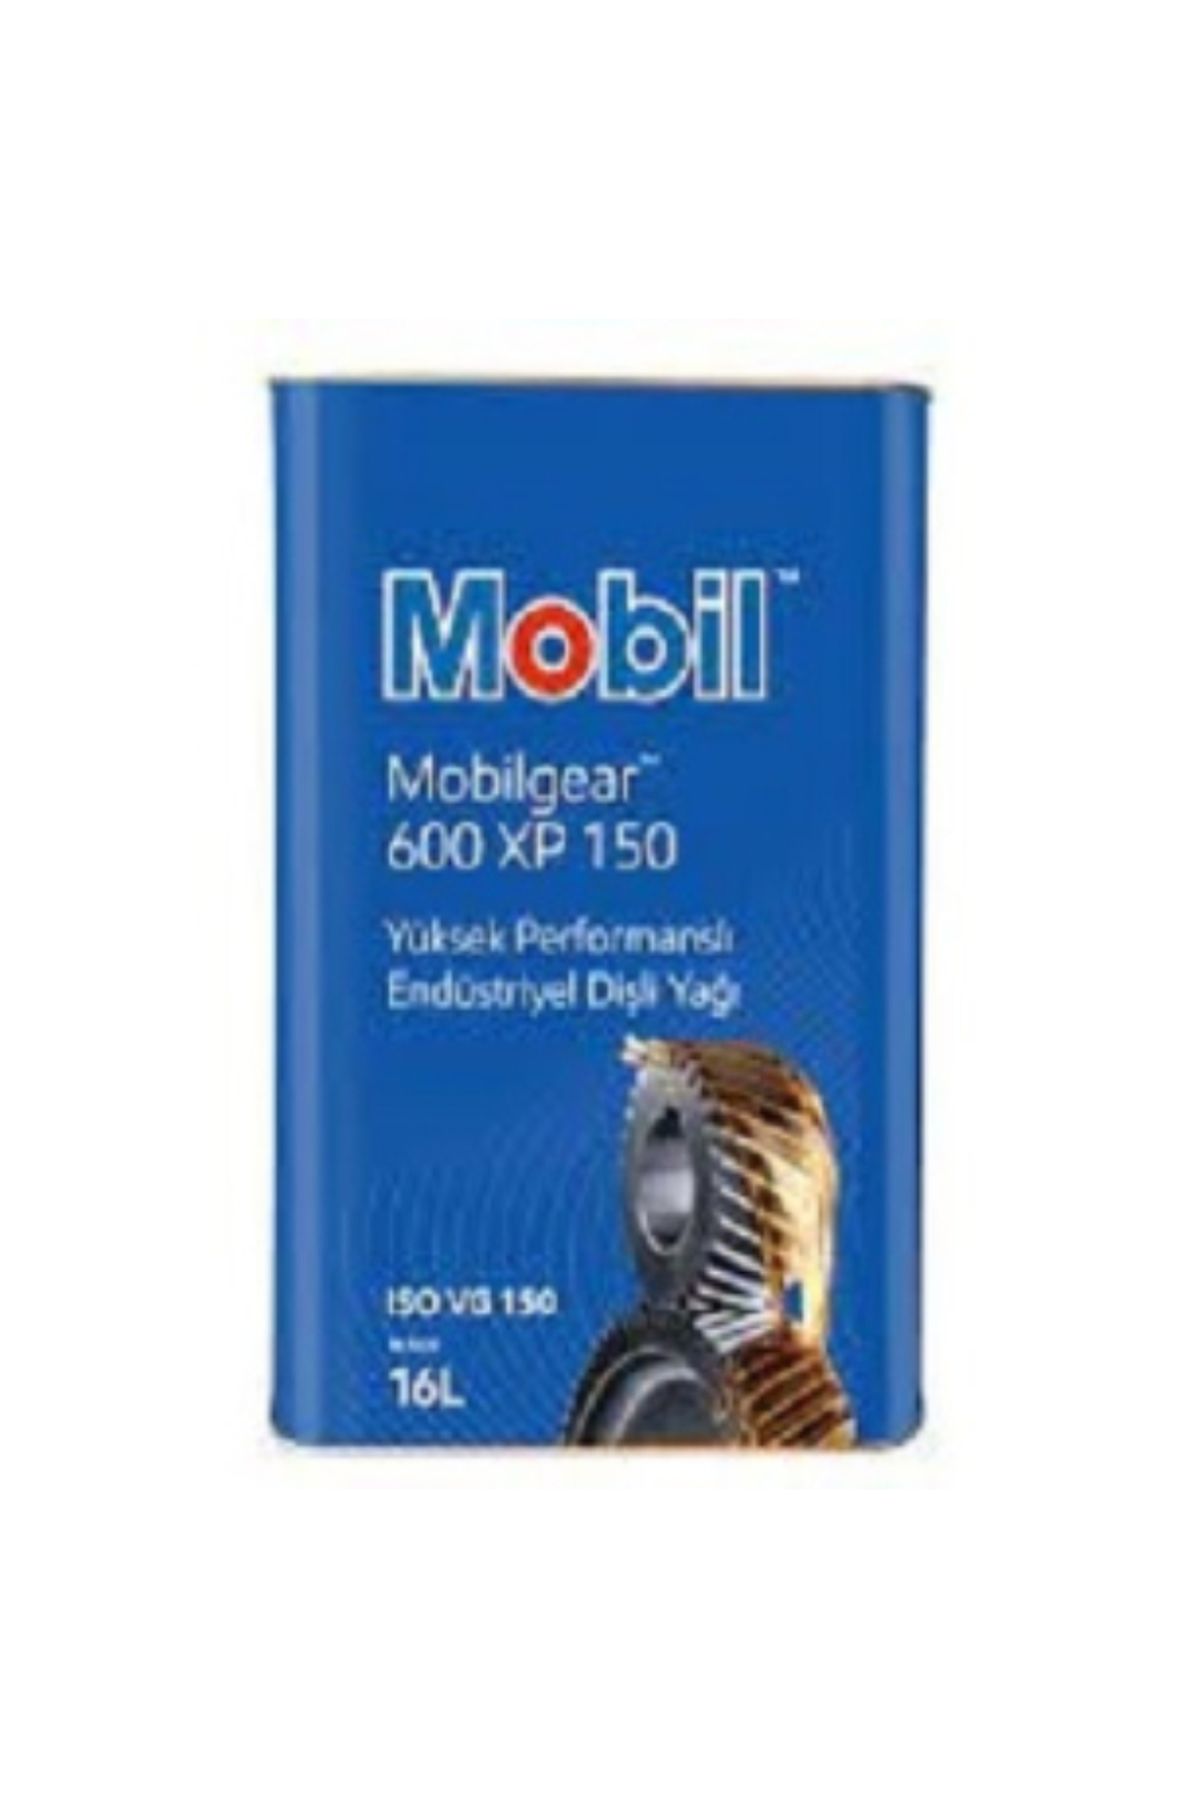 Mobil MobilGear 600 XP 150 - 16 Litre Endüstriyel Dişli Yağı